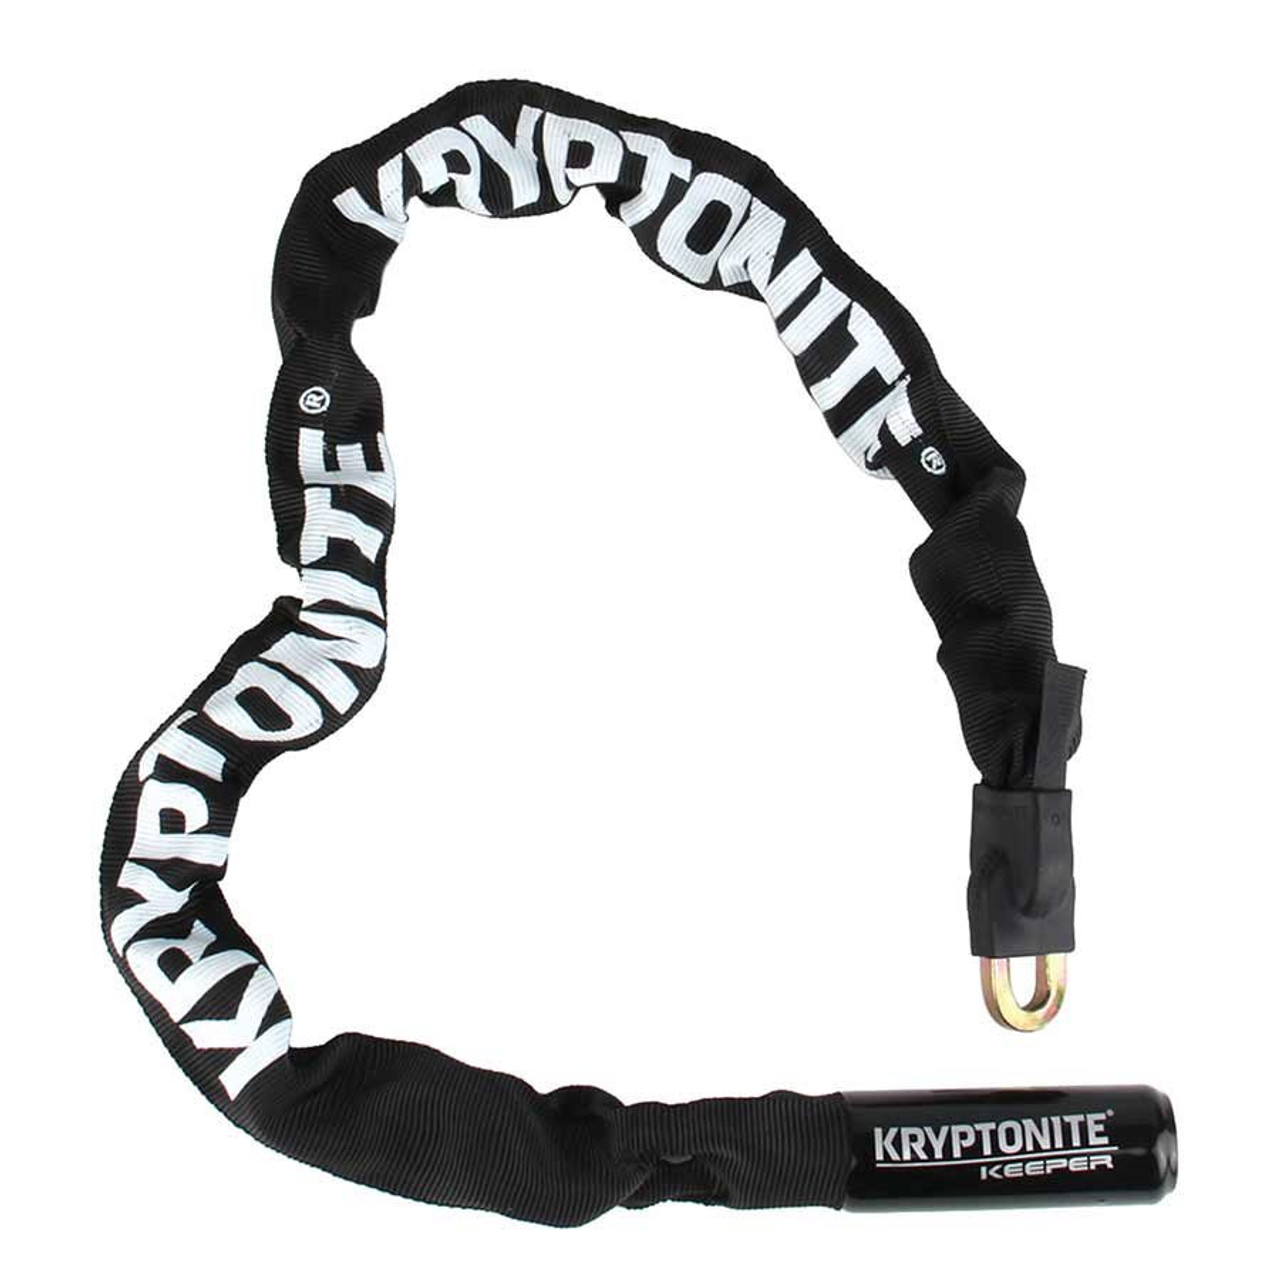 Keeper 785 chain - Kryptonite